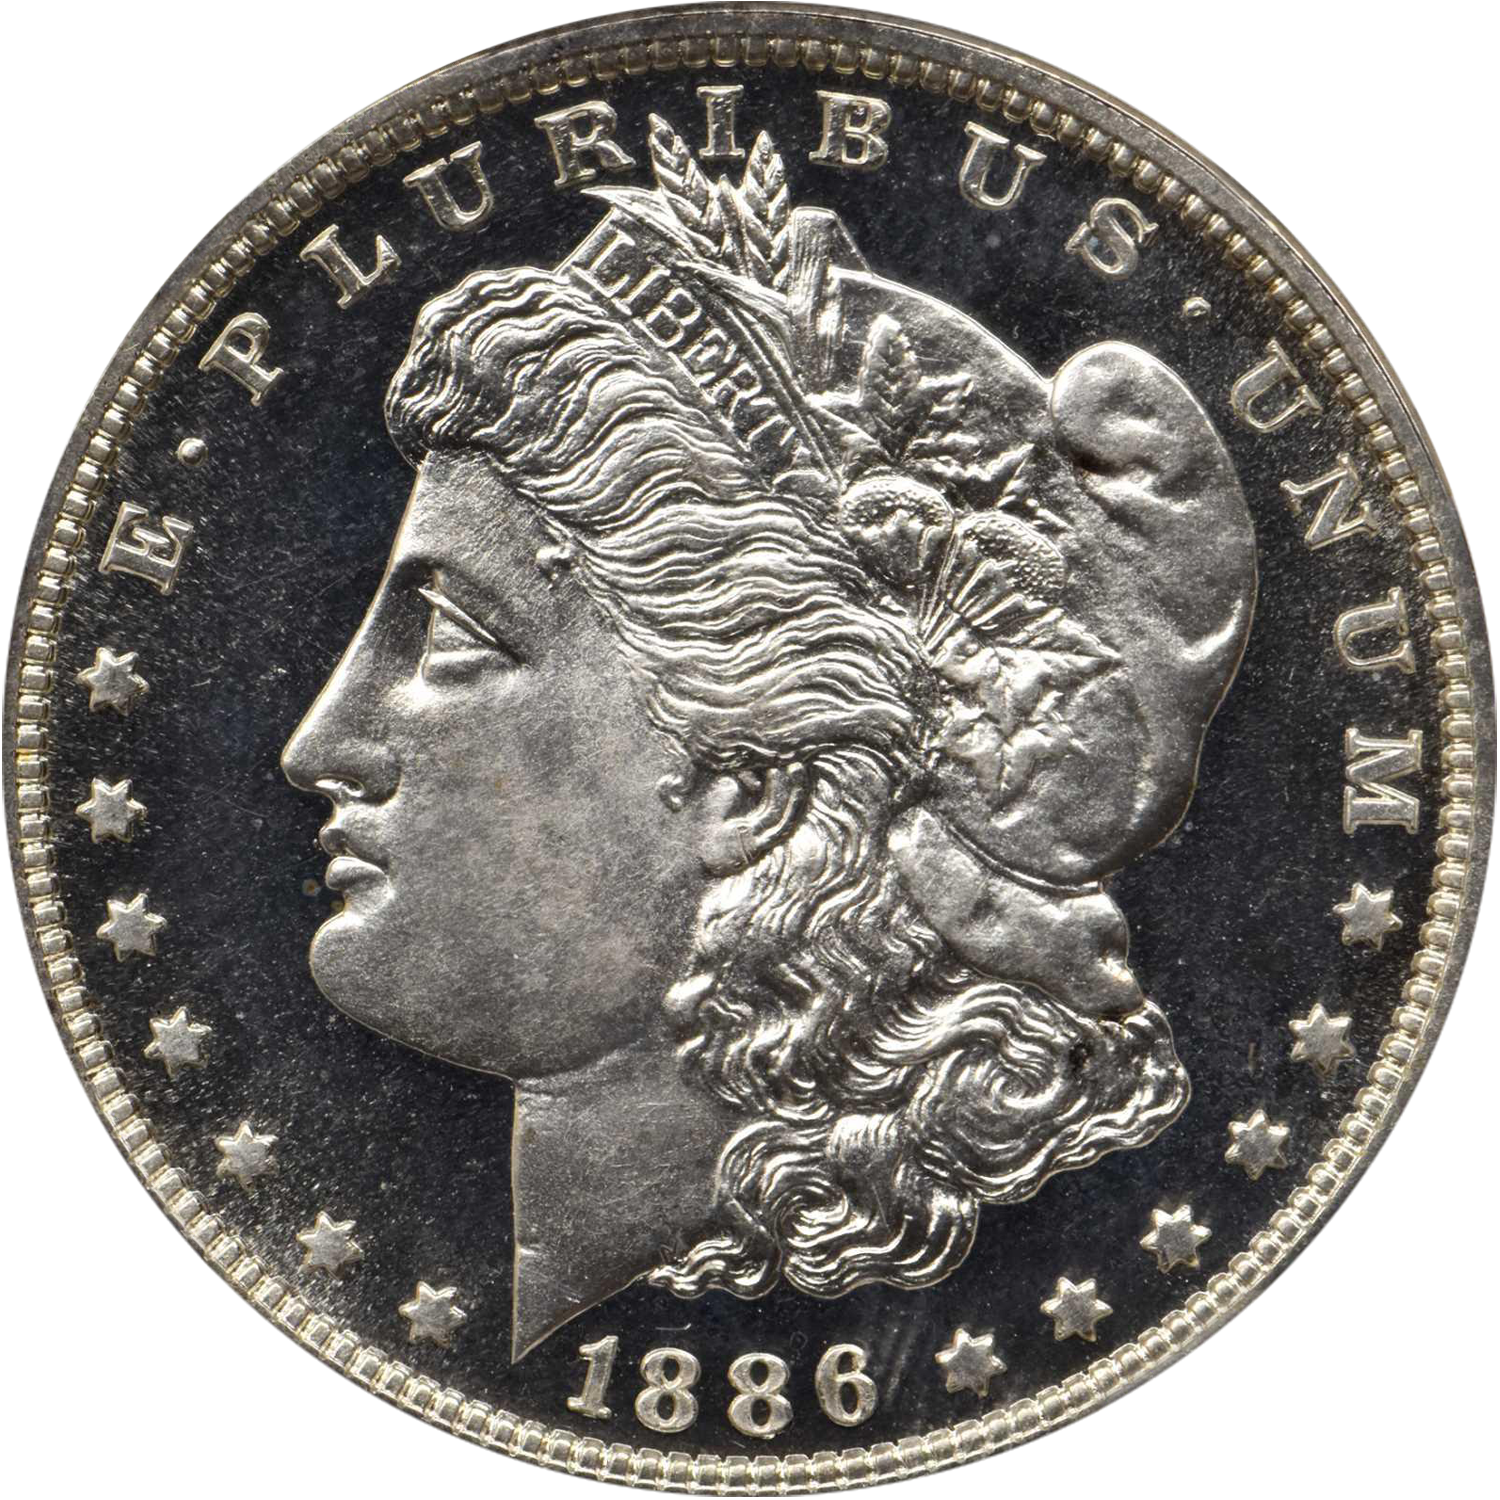 1886 proof morgan silver dollar